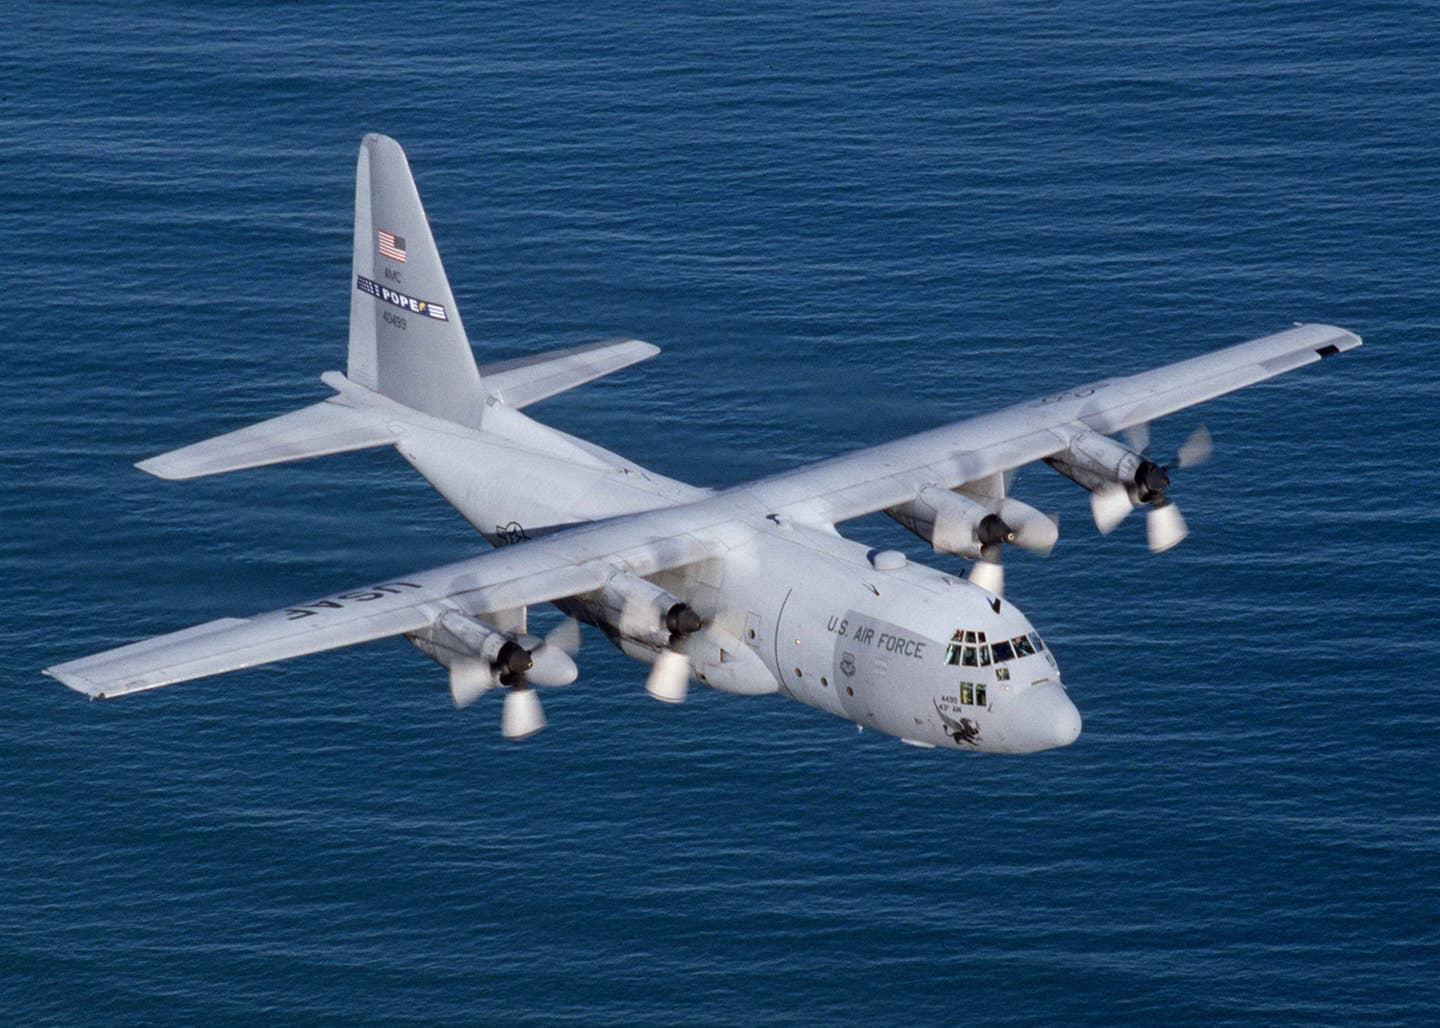 c-130 hercules transport planes